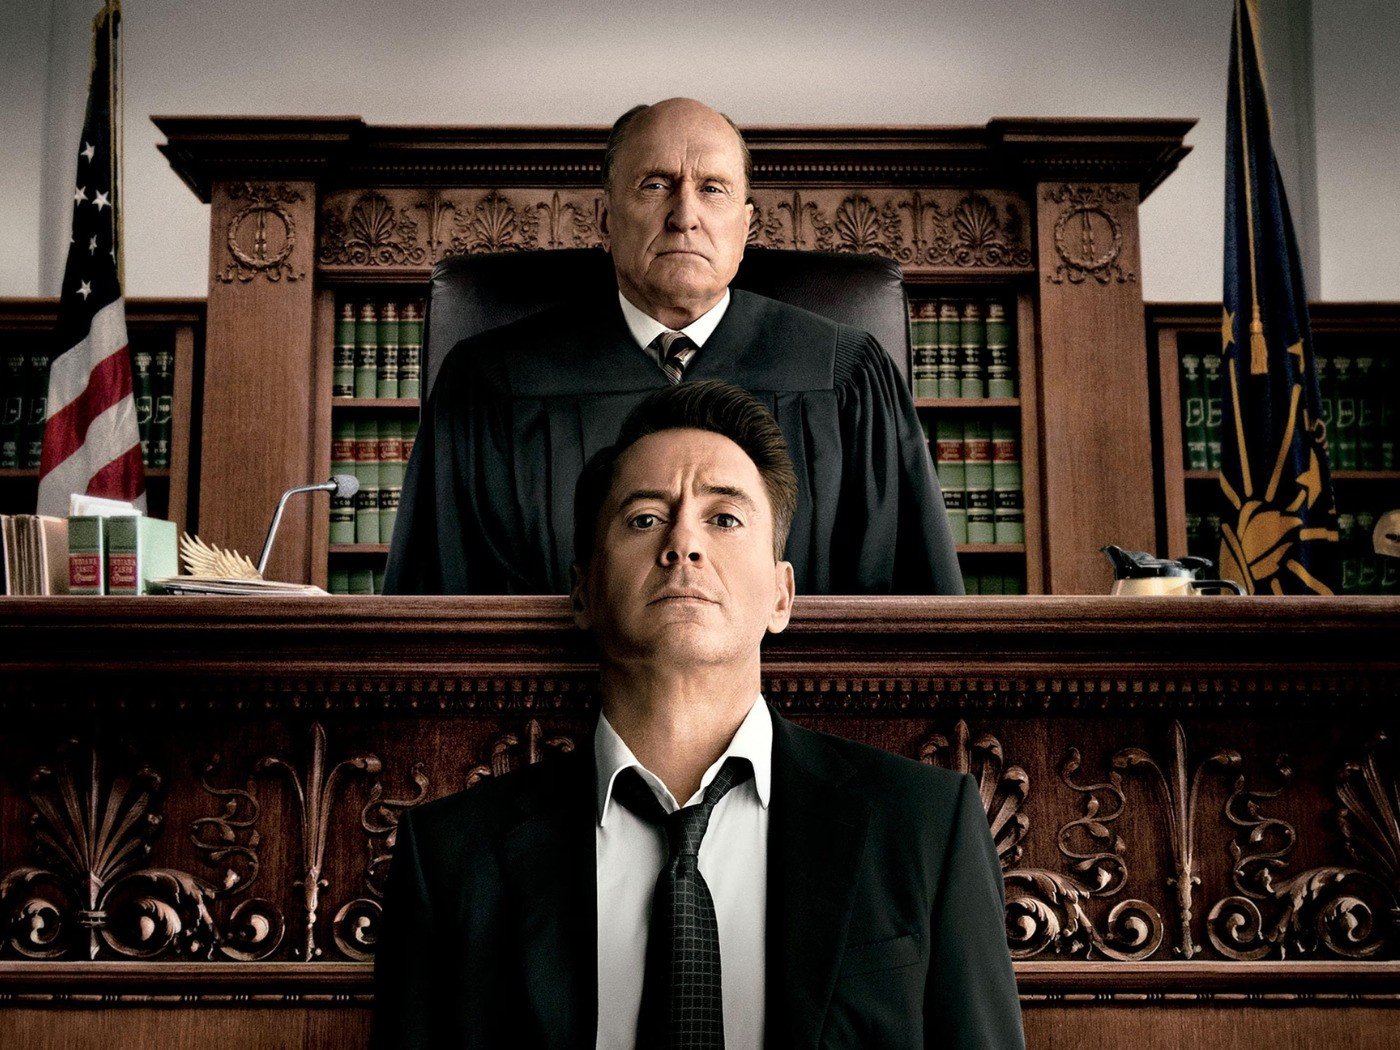 O juíz, filme com Robert Downey Jr. e Robert Duvall